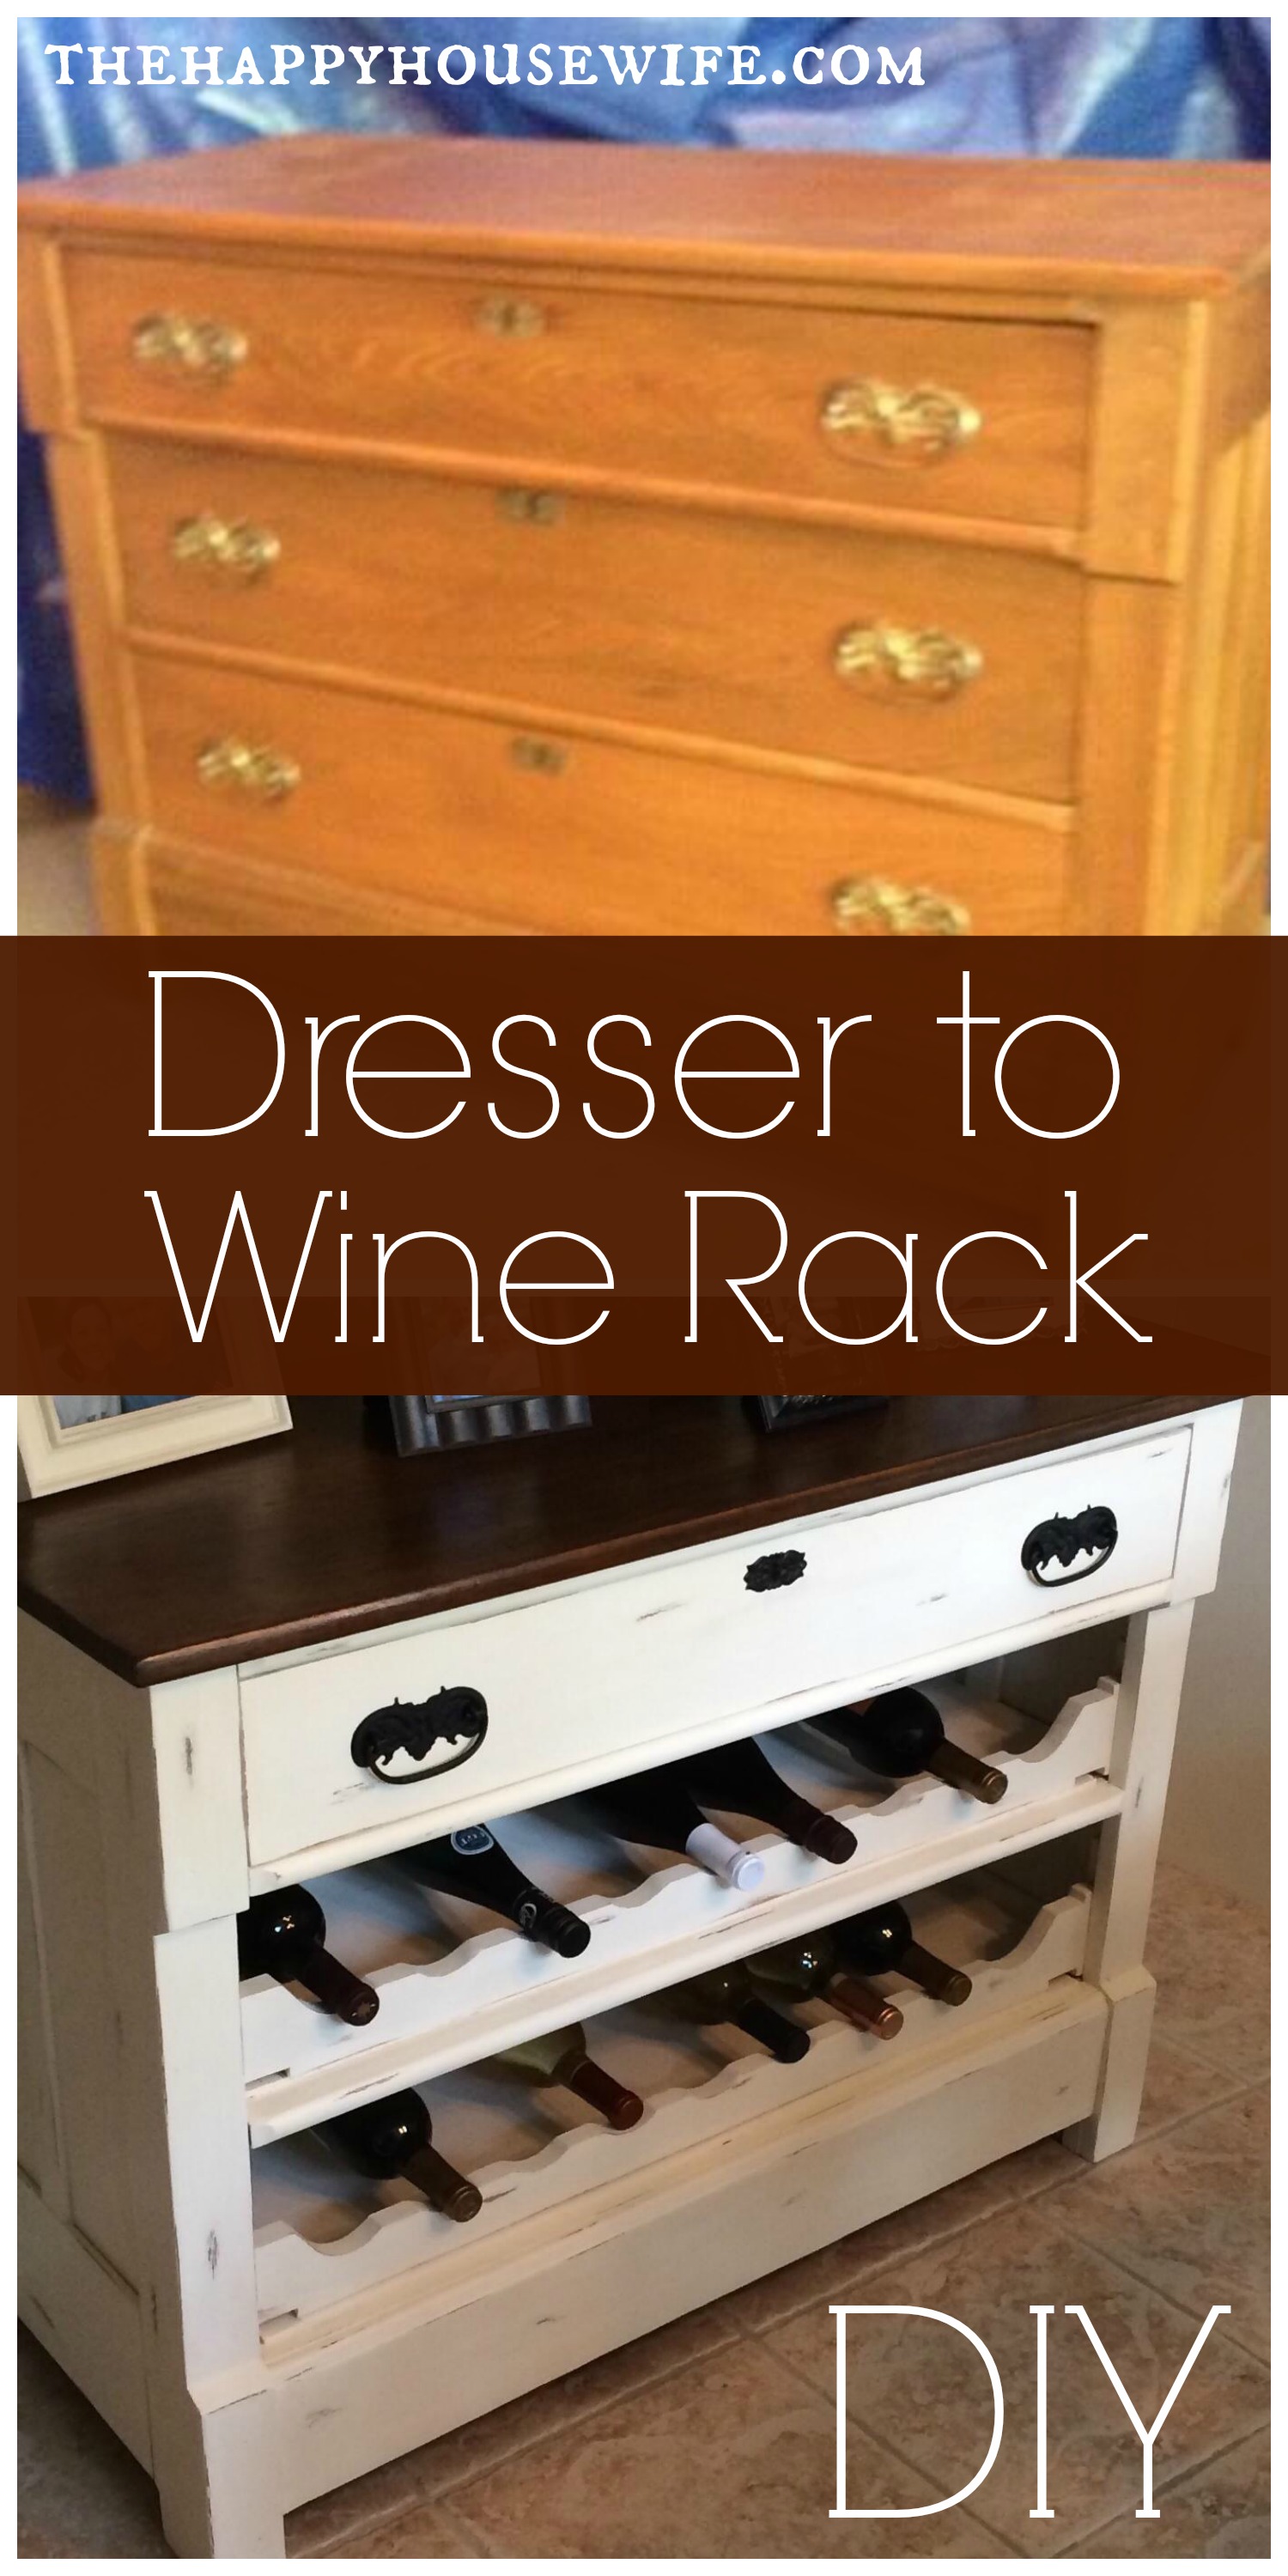 Dresser to Wine Rack DIY - The Happy Housewife™ :: Home 